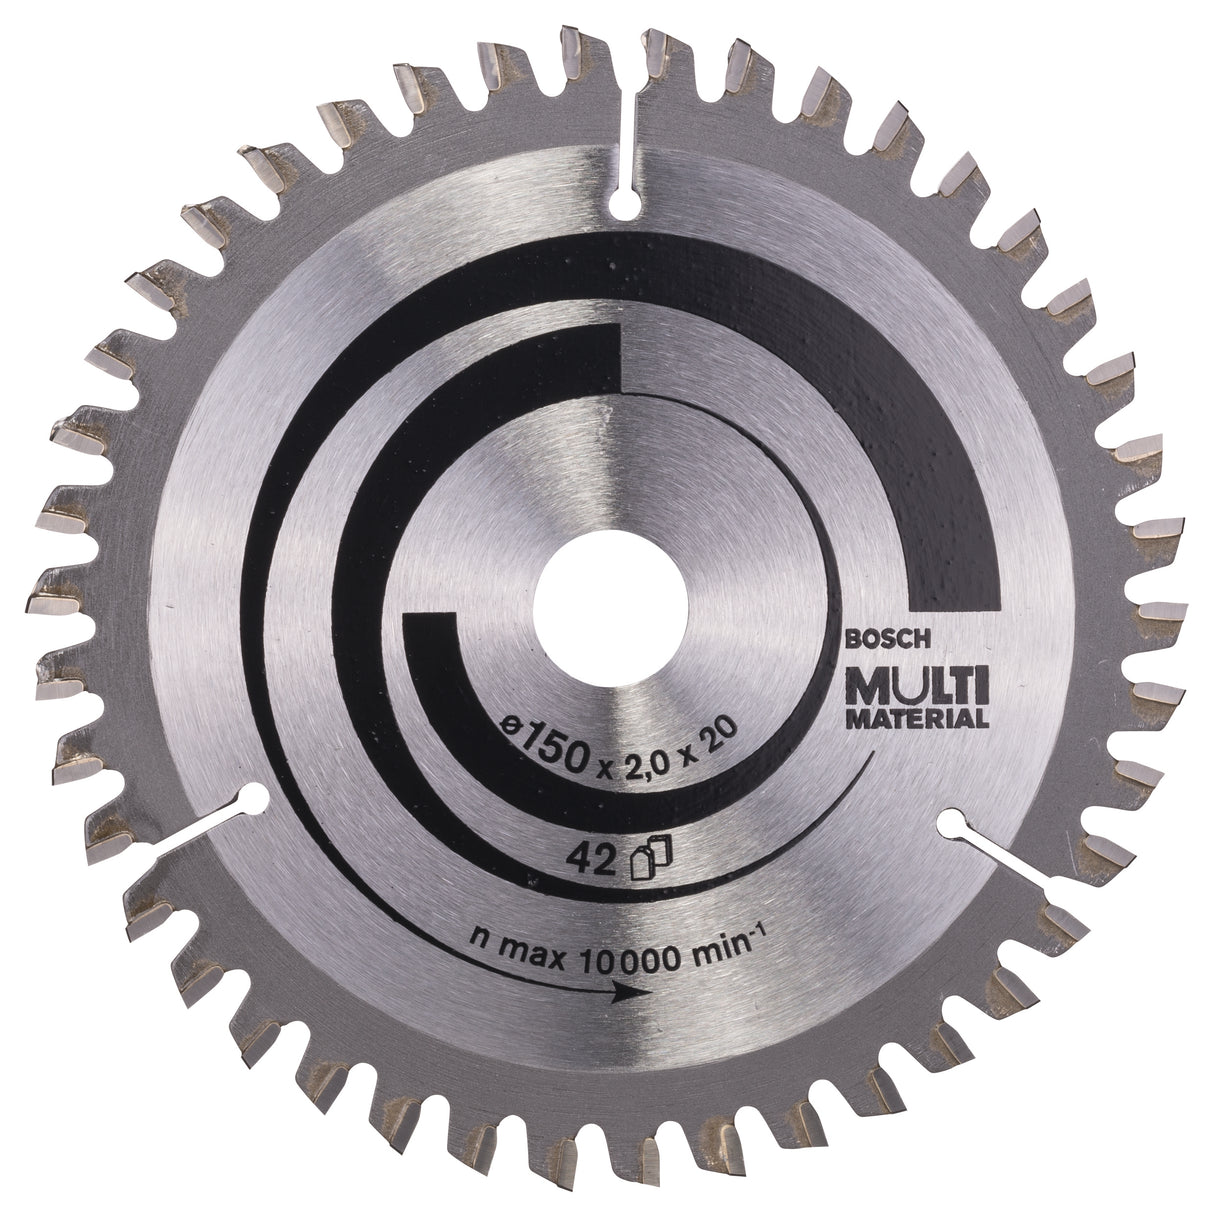 Bosch Professional Multi Material Circular Saw Blade - 150 x 20/16 x 2.0 mm (42)